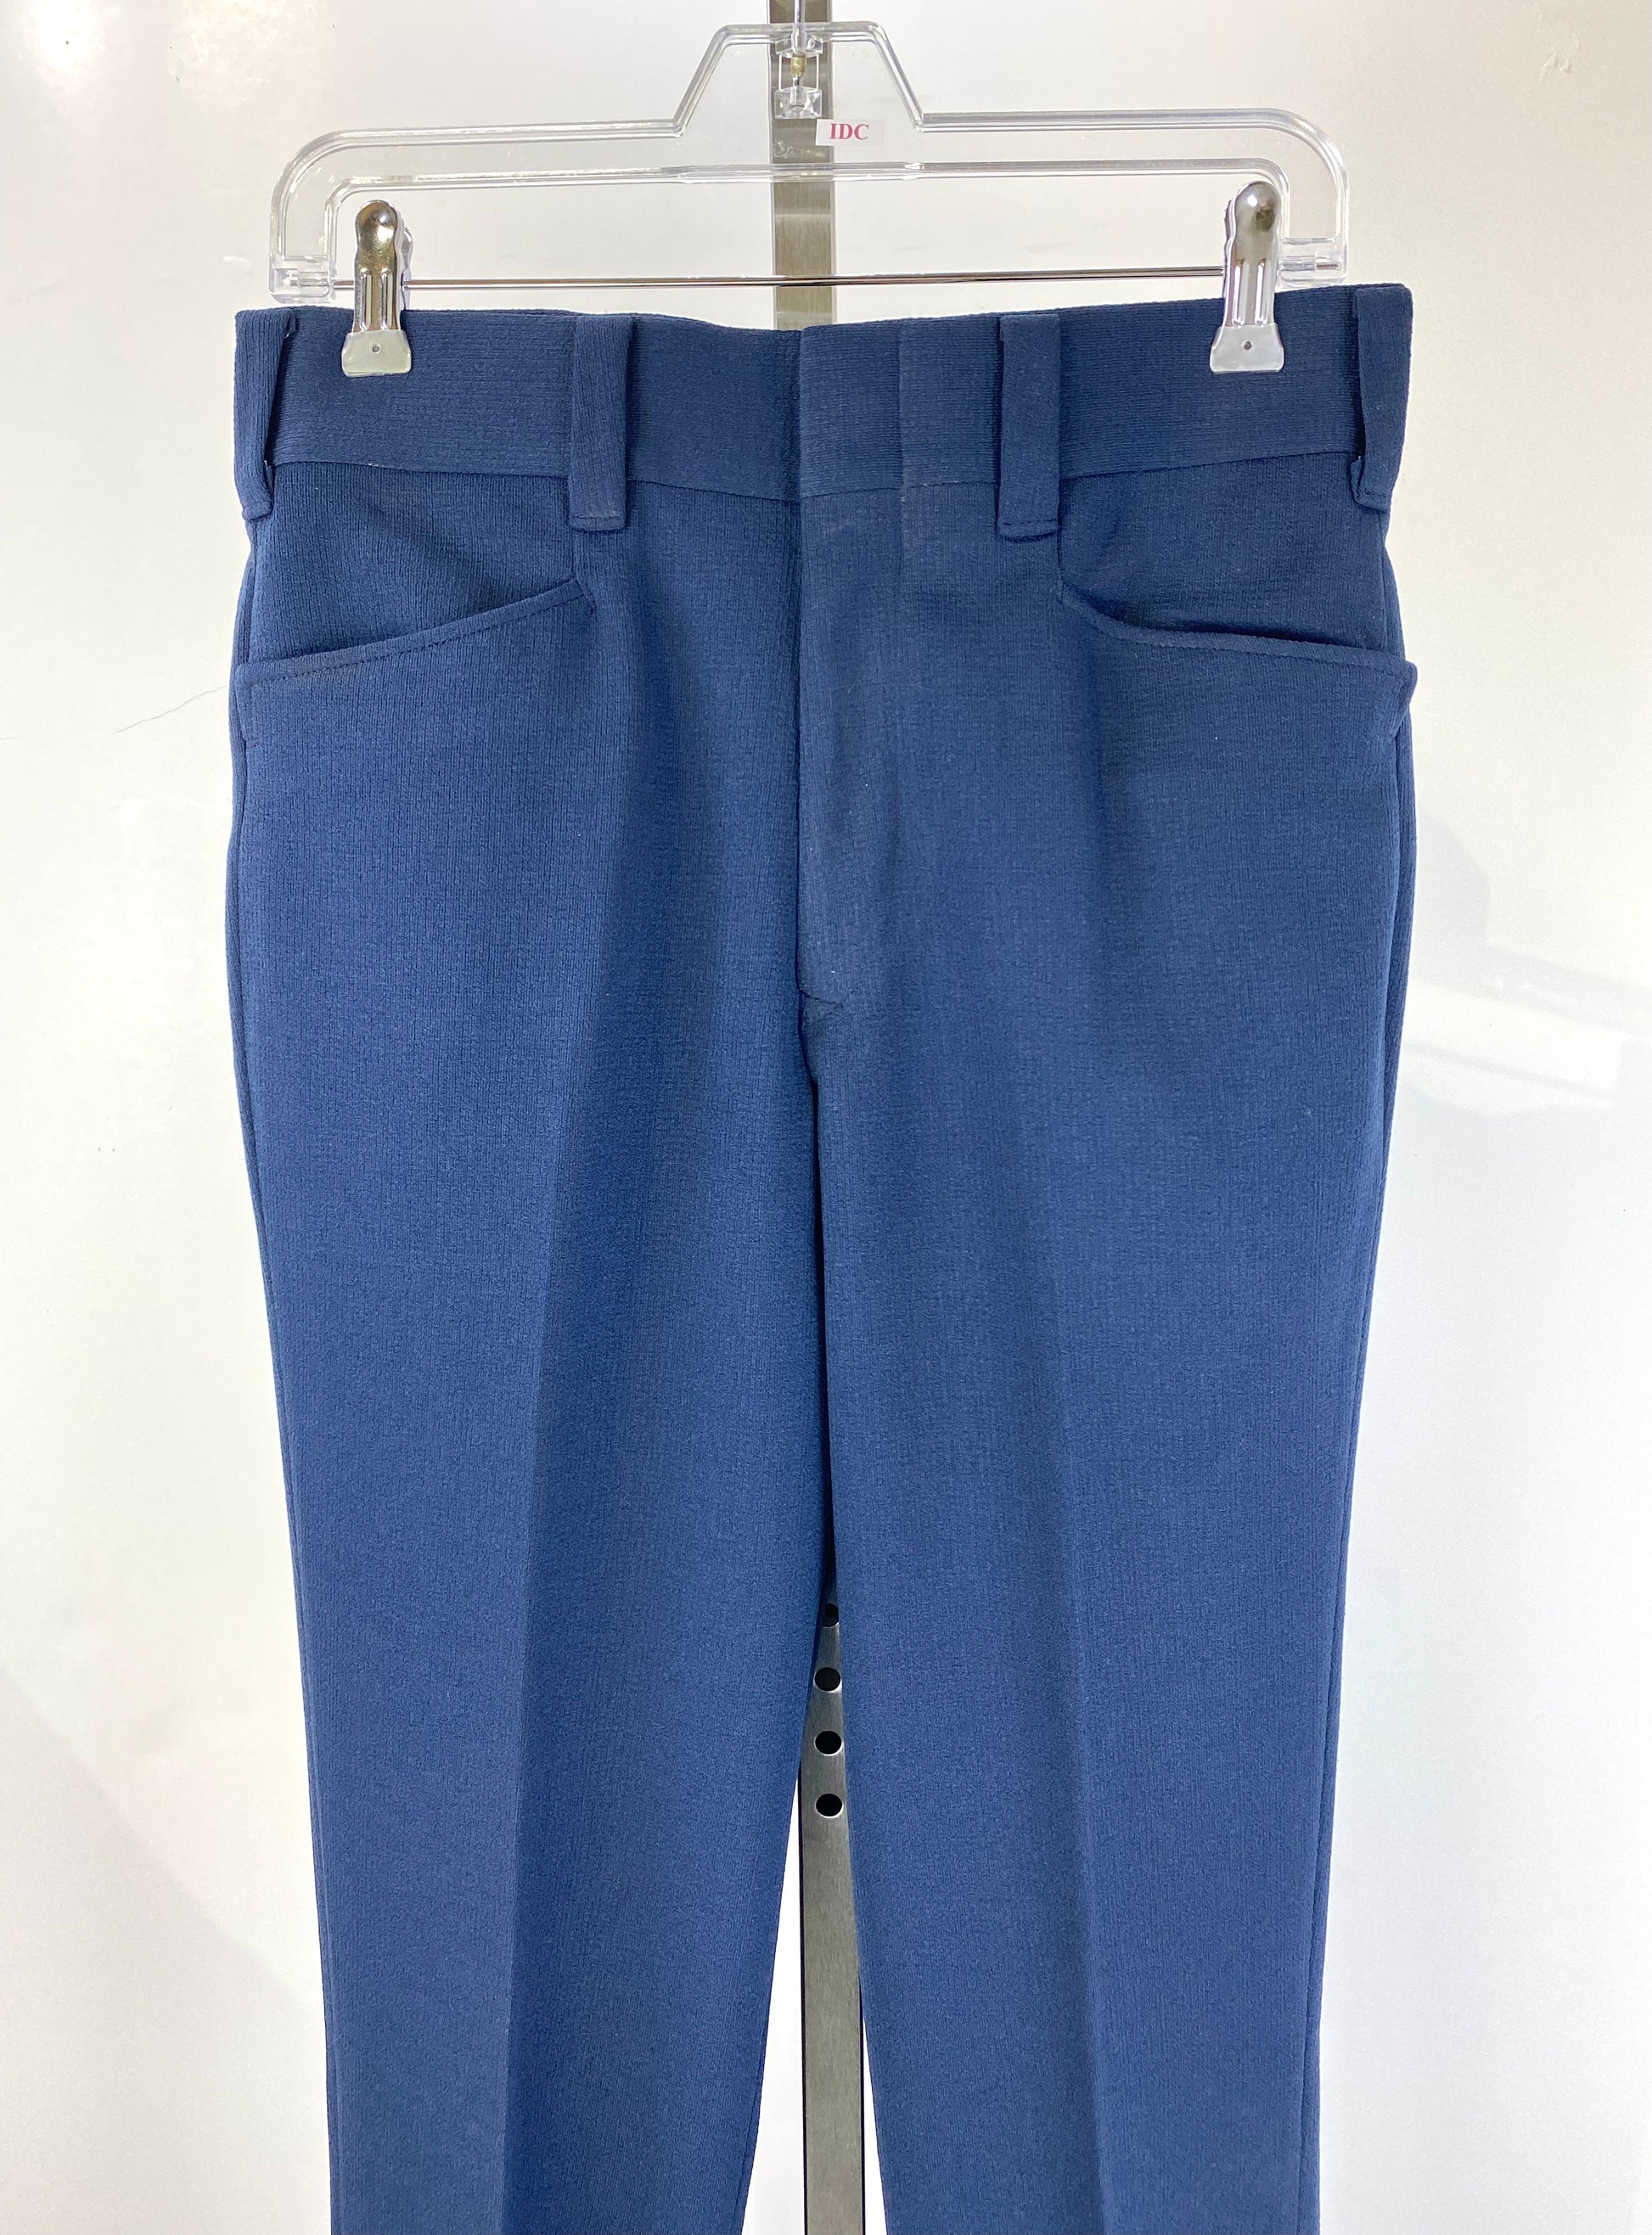 Vintage 1970s Deadstock Navy Slacks, Men's Flared Poly Trousers, NOS